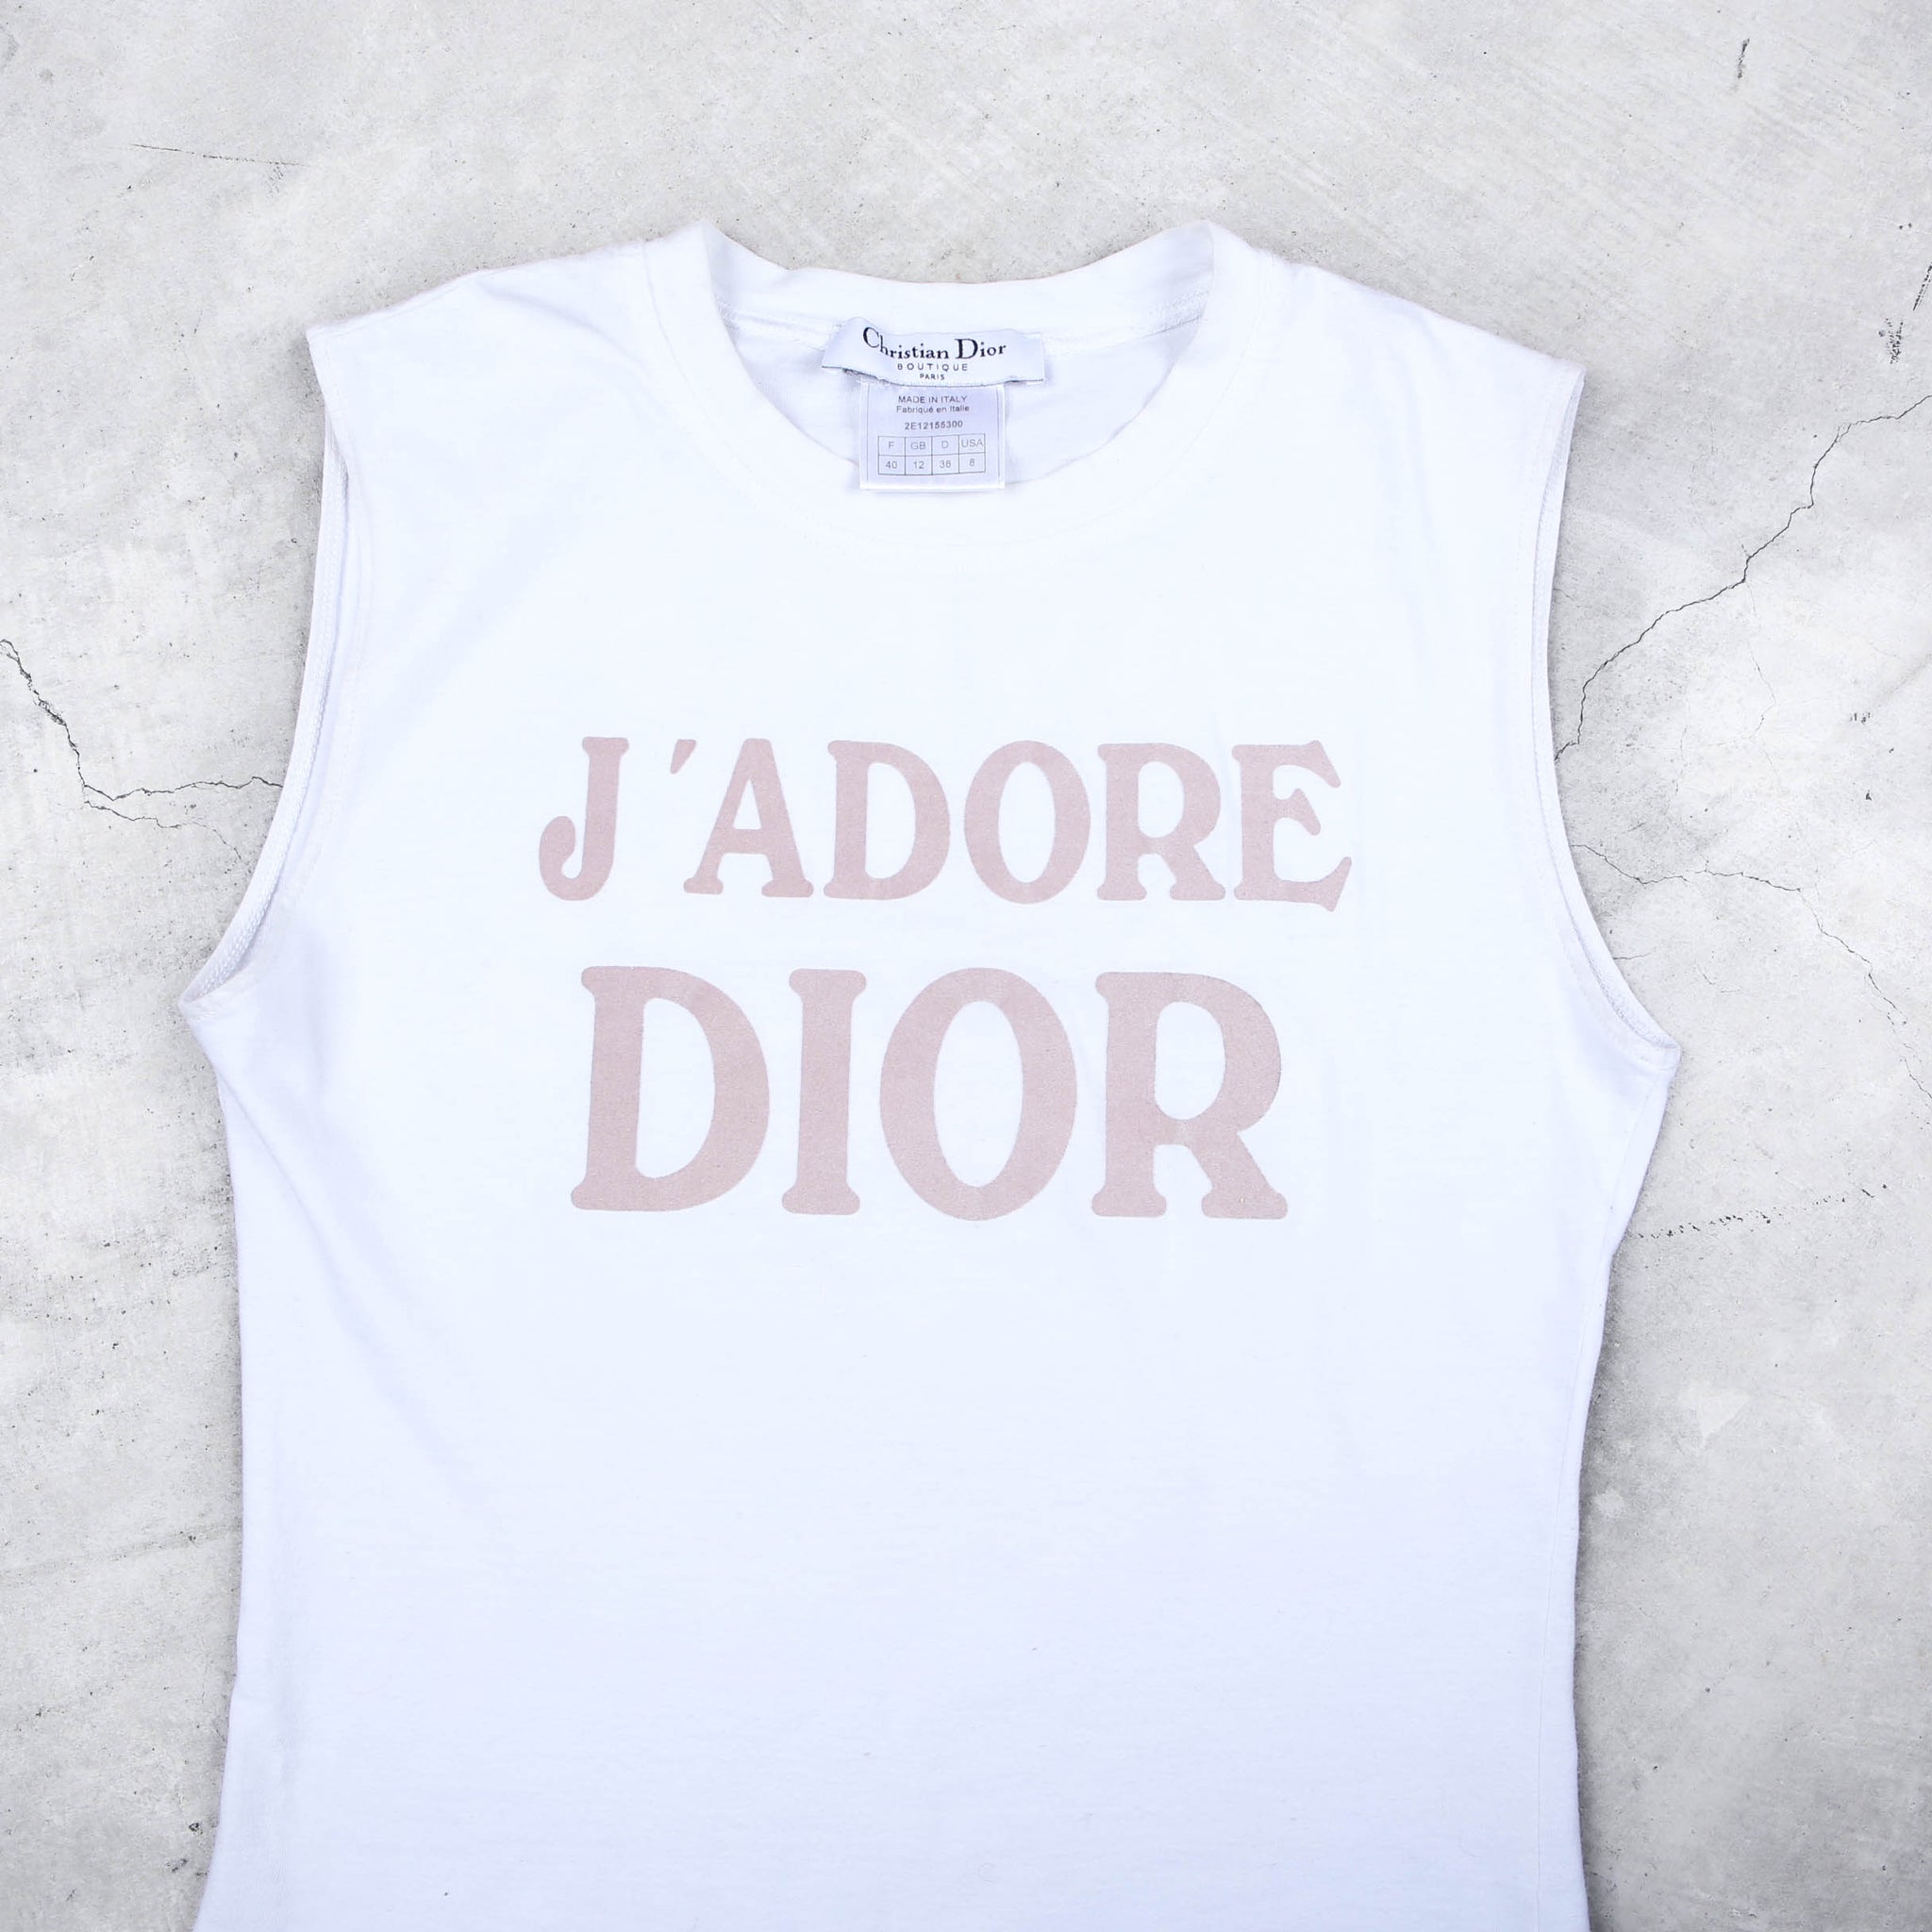 Dior "J'ADORE DIOR WORLD CHAMPION 1947" Tank Top